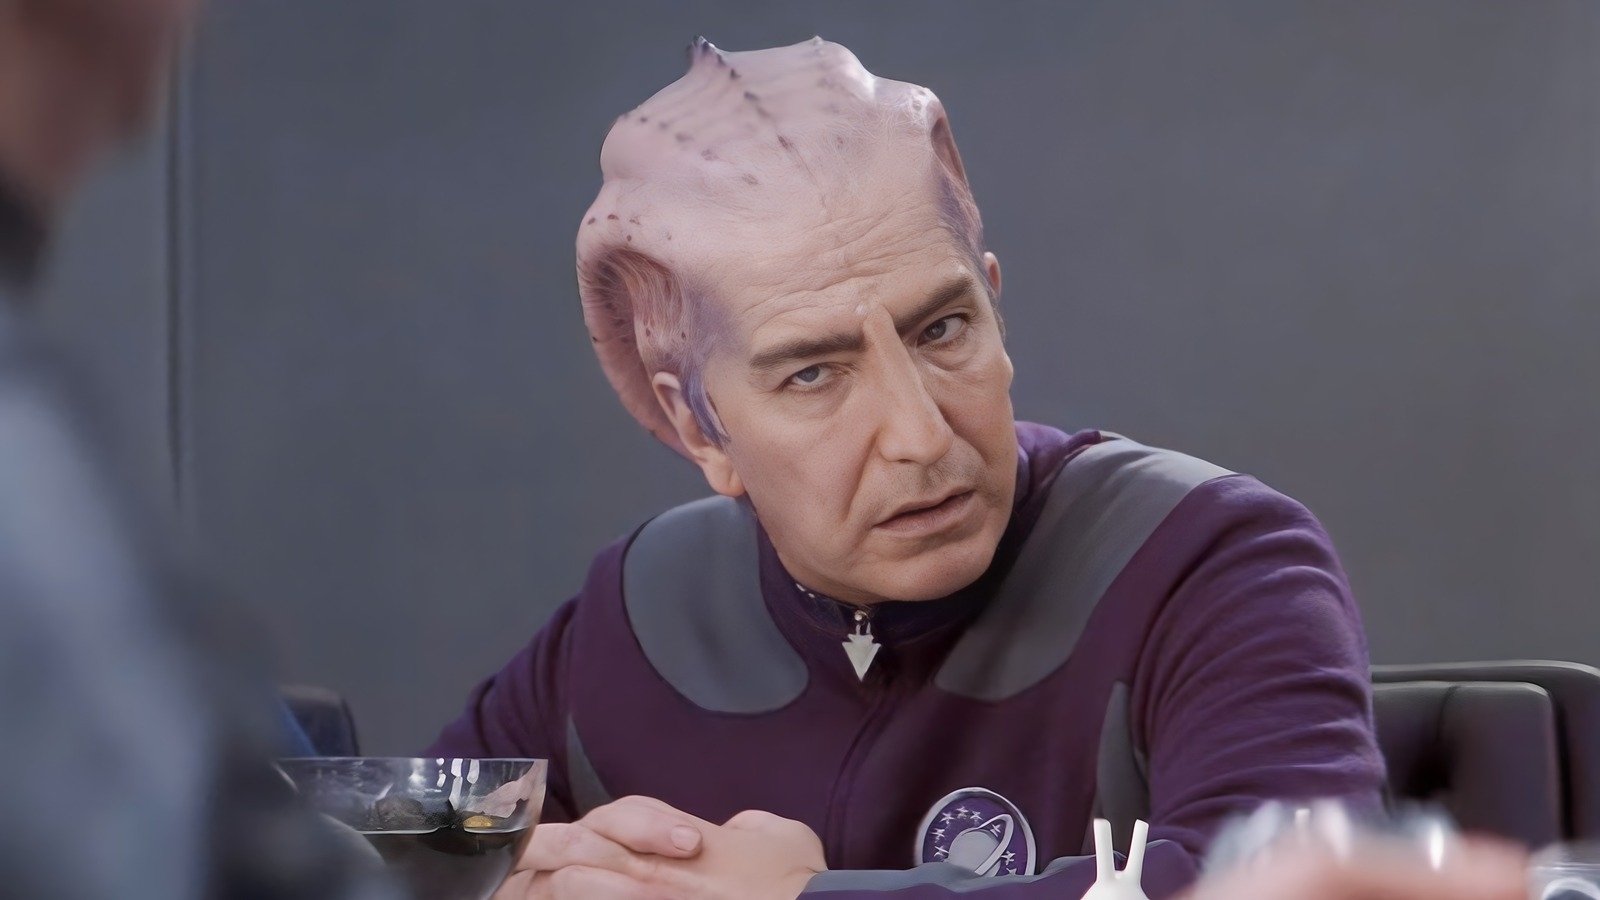 Character in Starfleet uniform with alien prosthetics looking pensive at a meeting